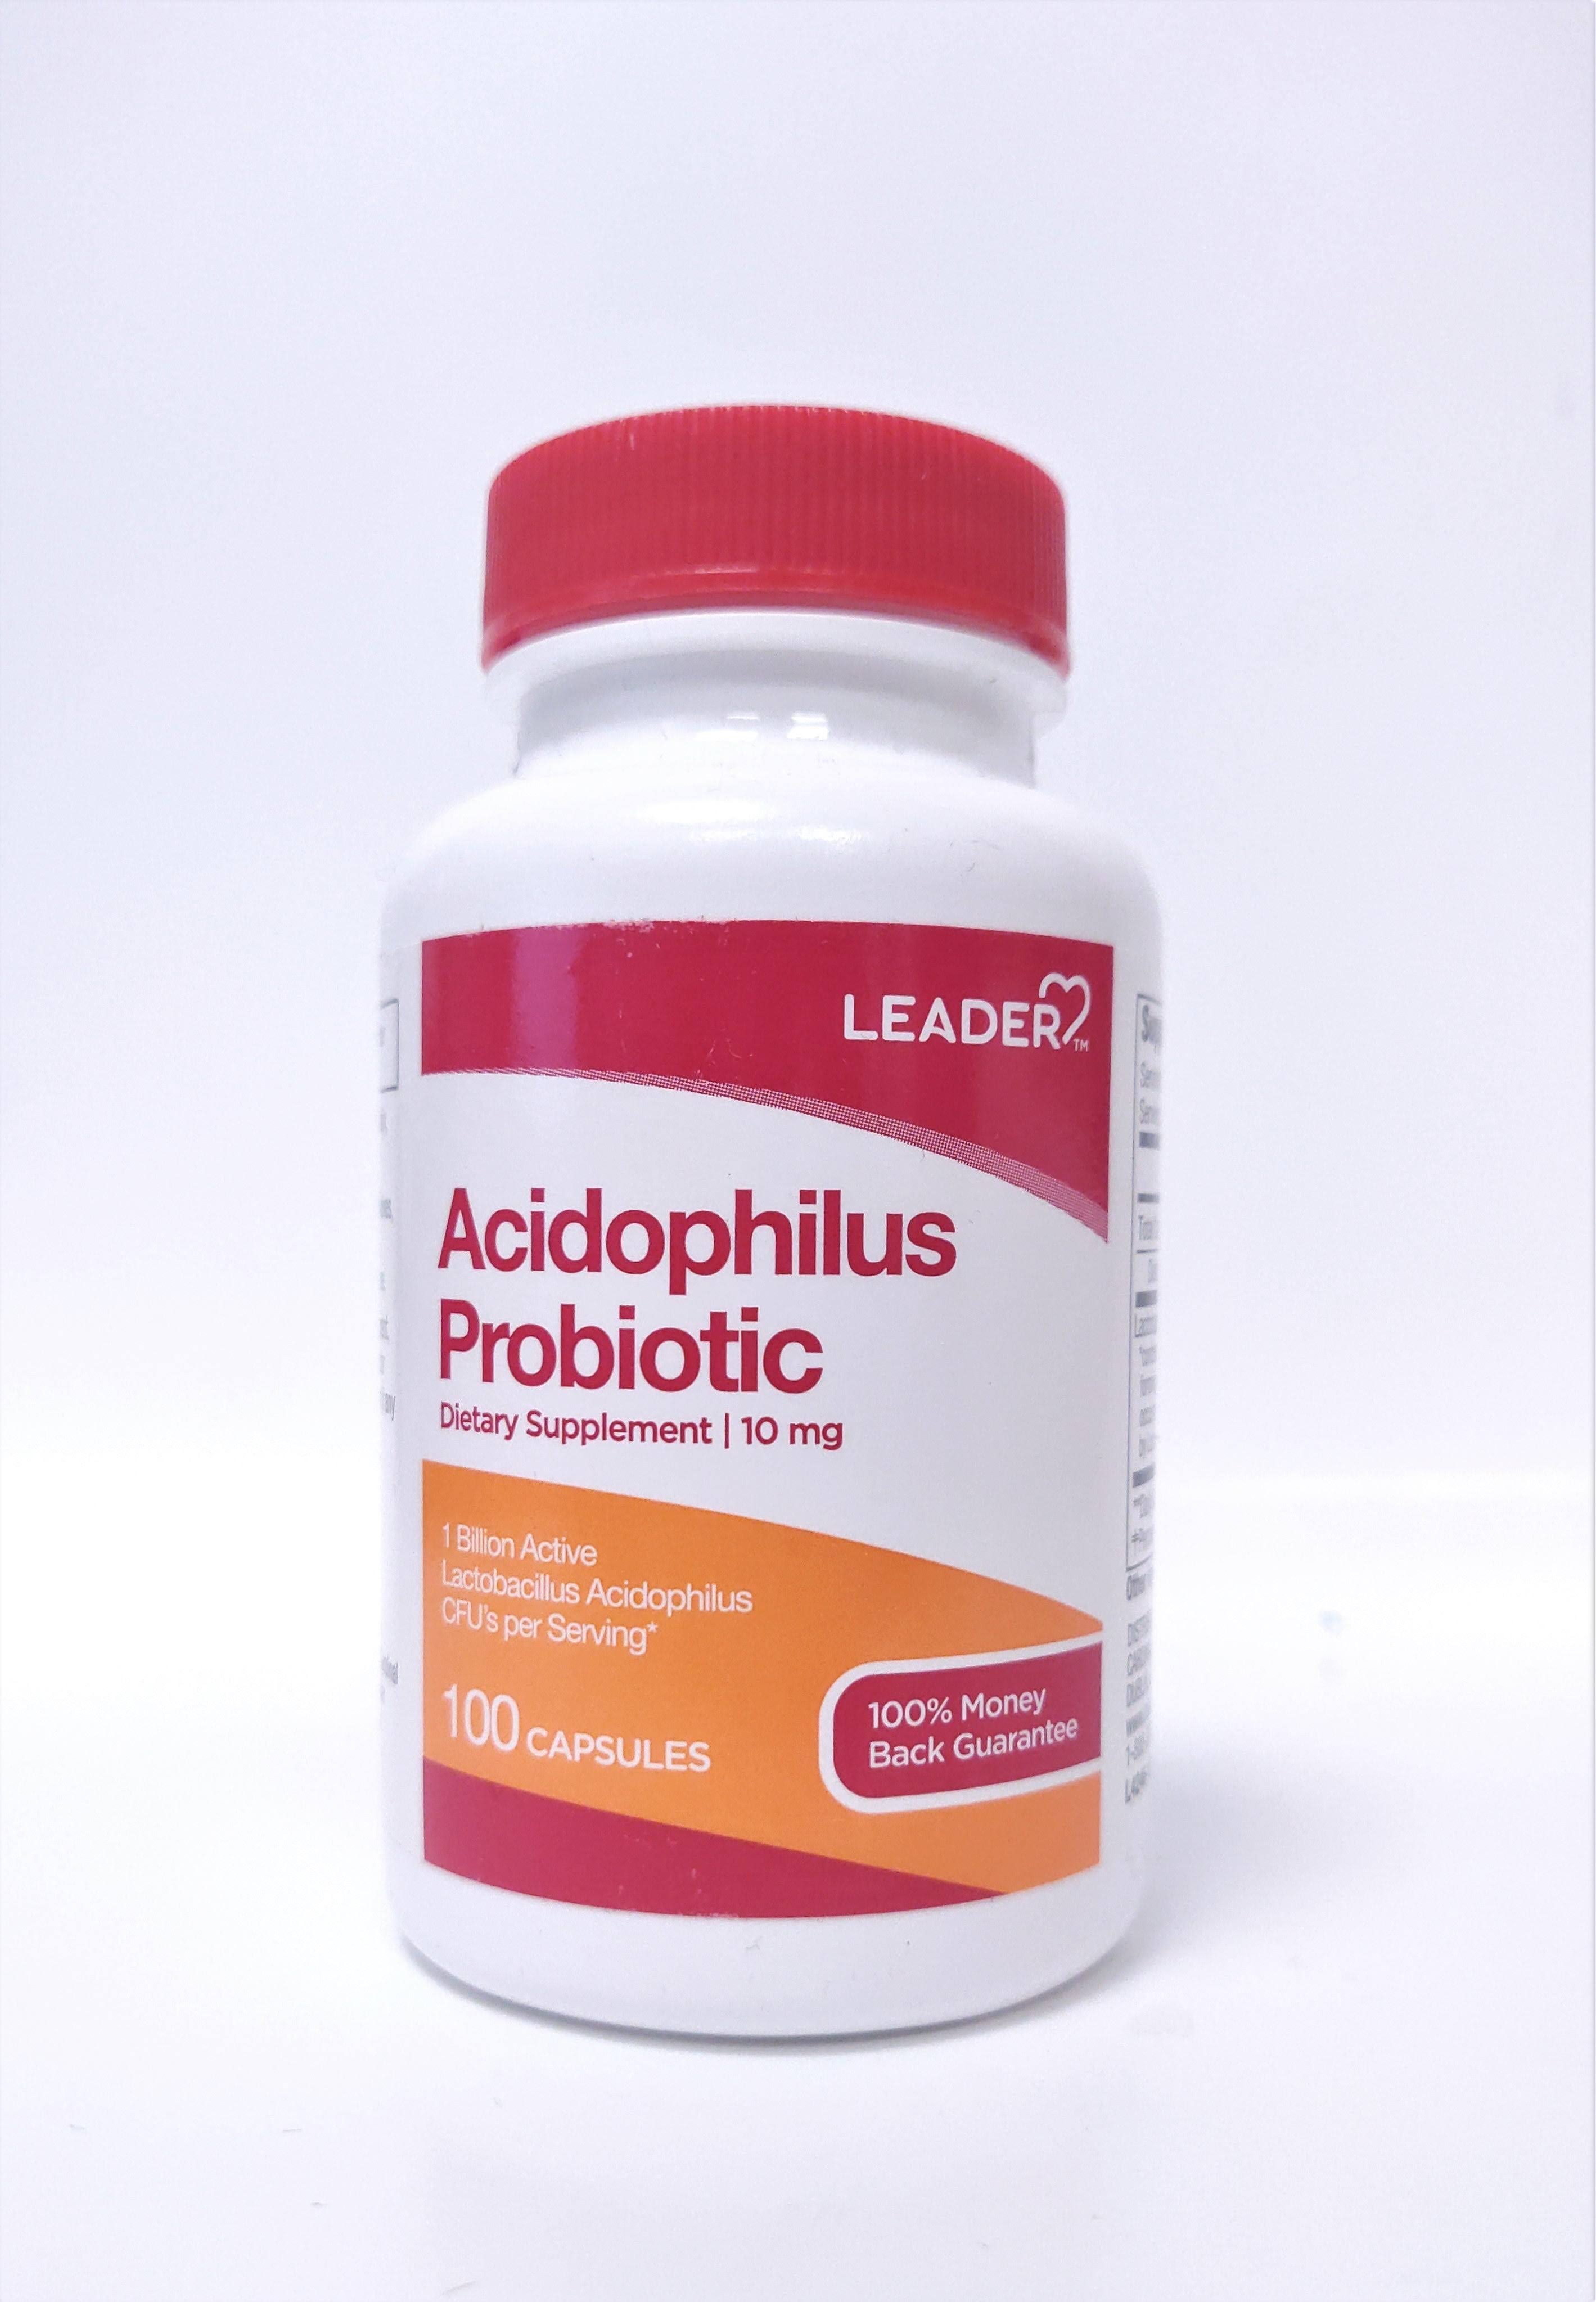 Leader Acidophilus Probiotic Dietary Supplement - 10mg - 100 Capsules